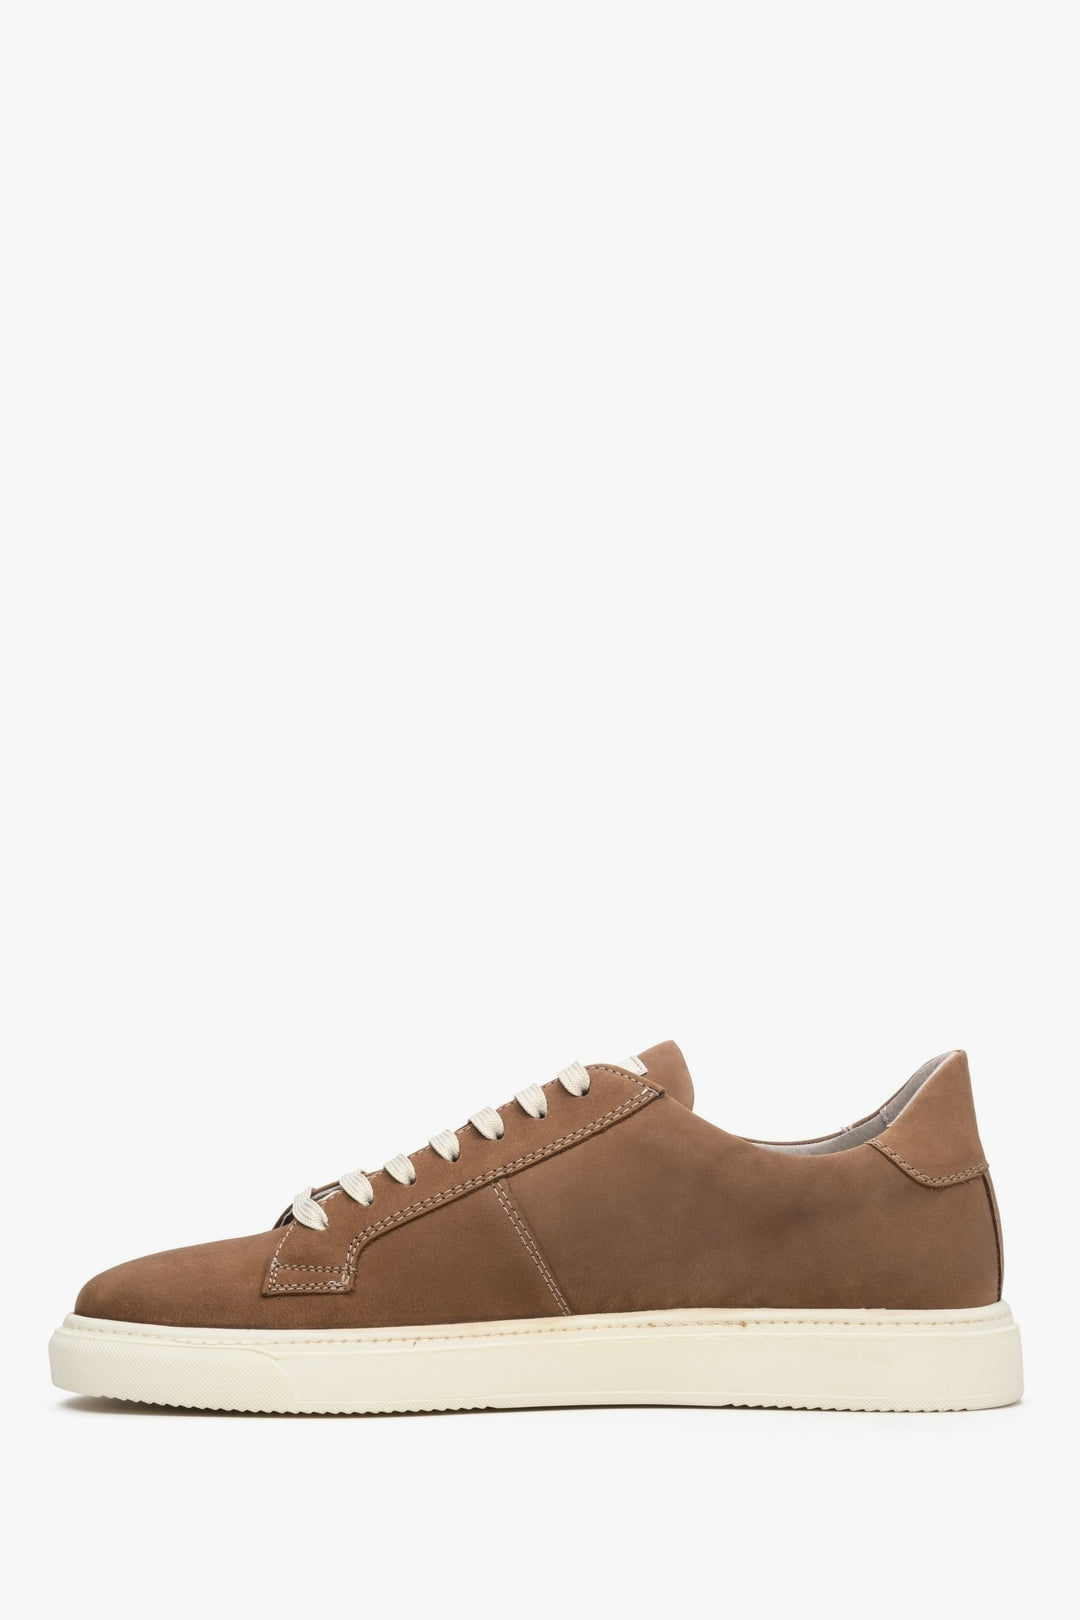 Spring-fall men's Estro nubuck sneakers in brown - shoe profile.